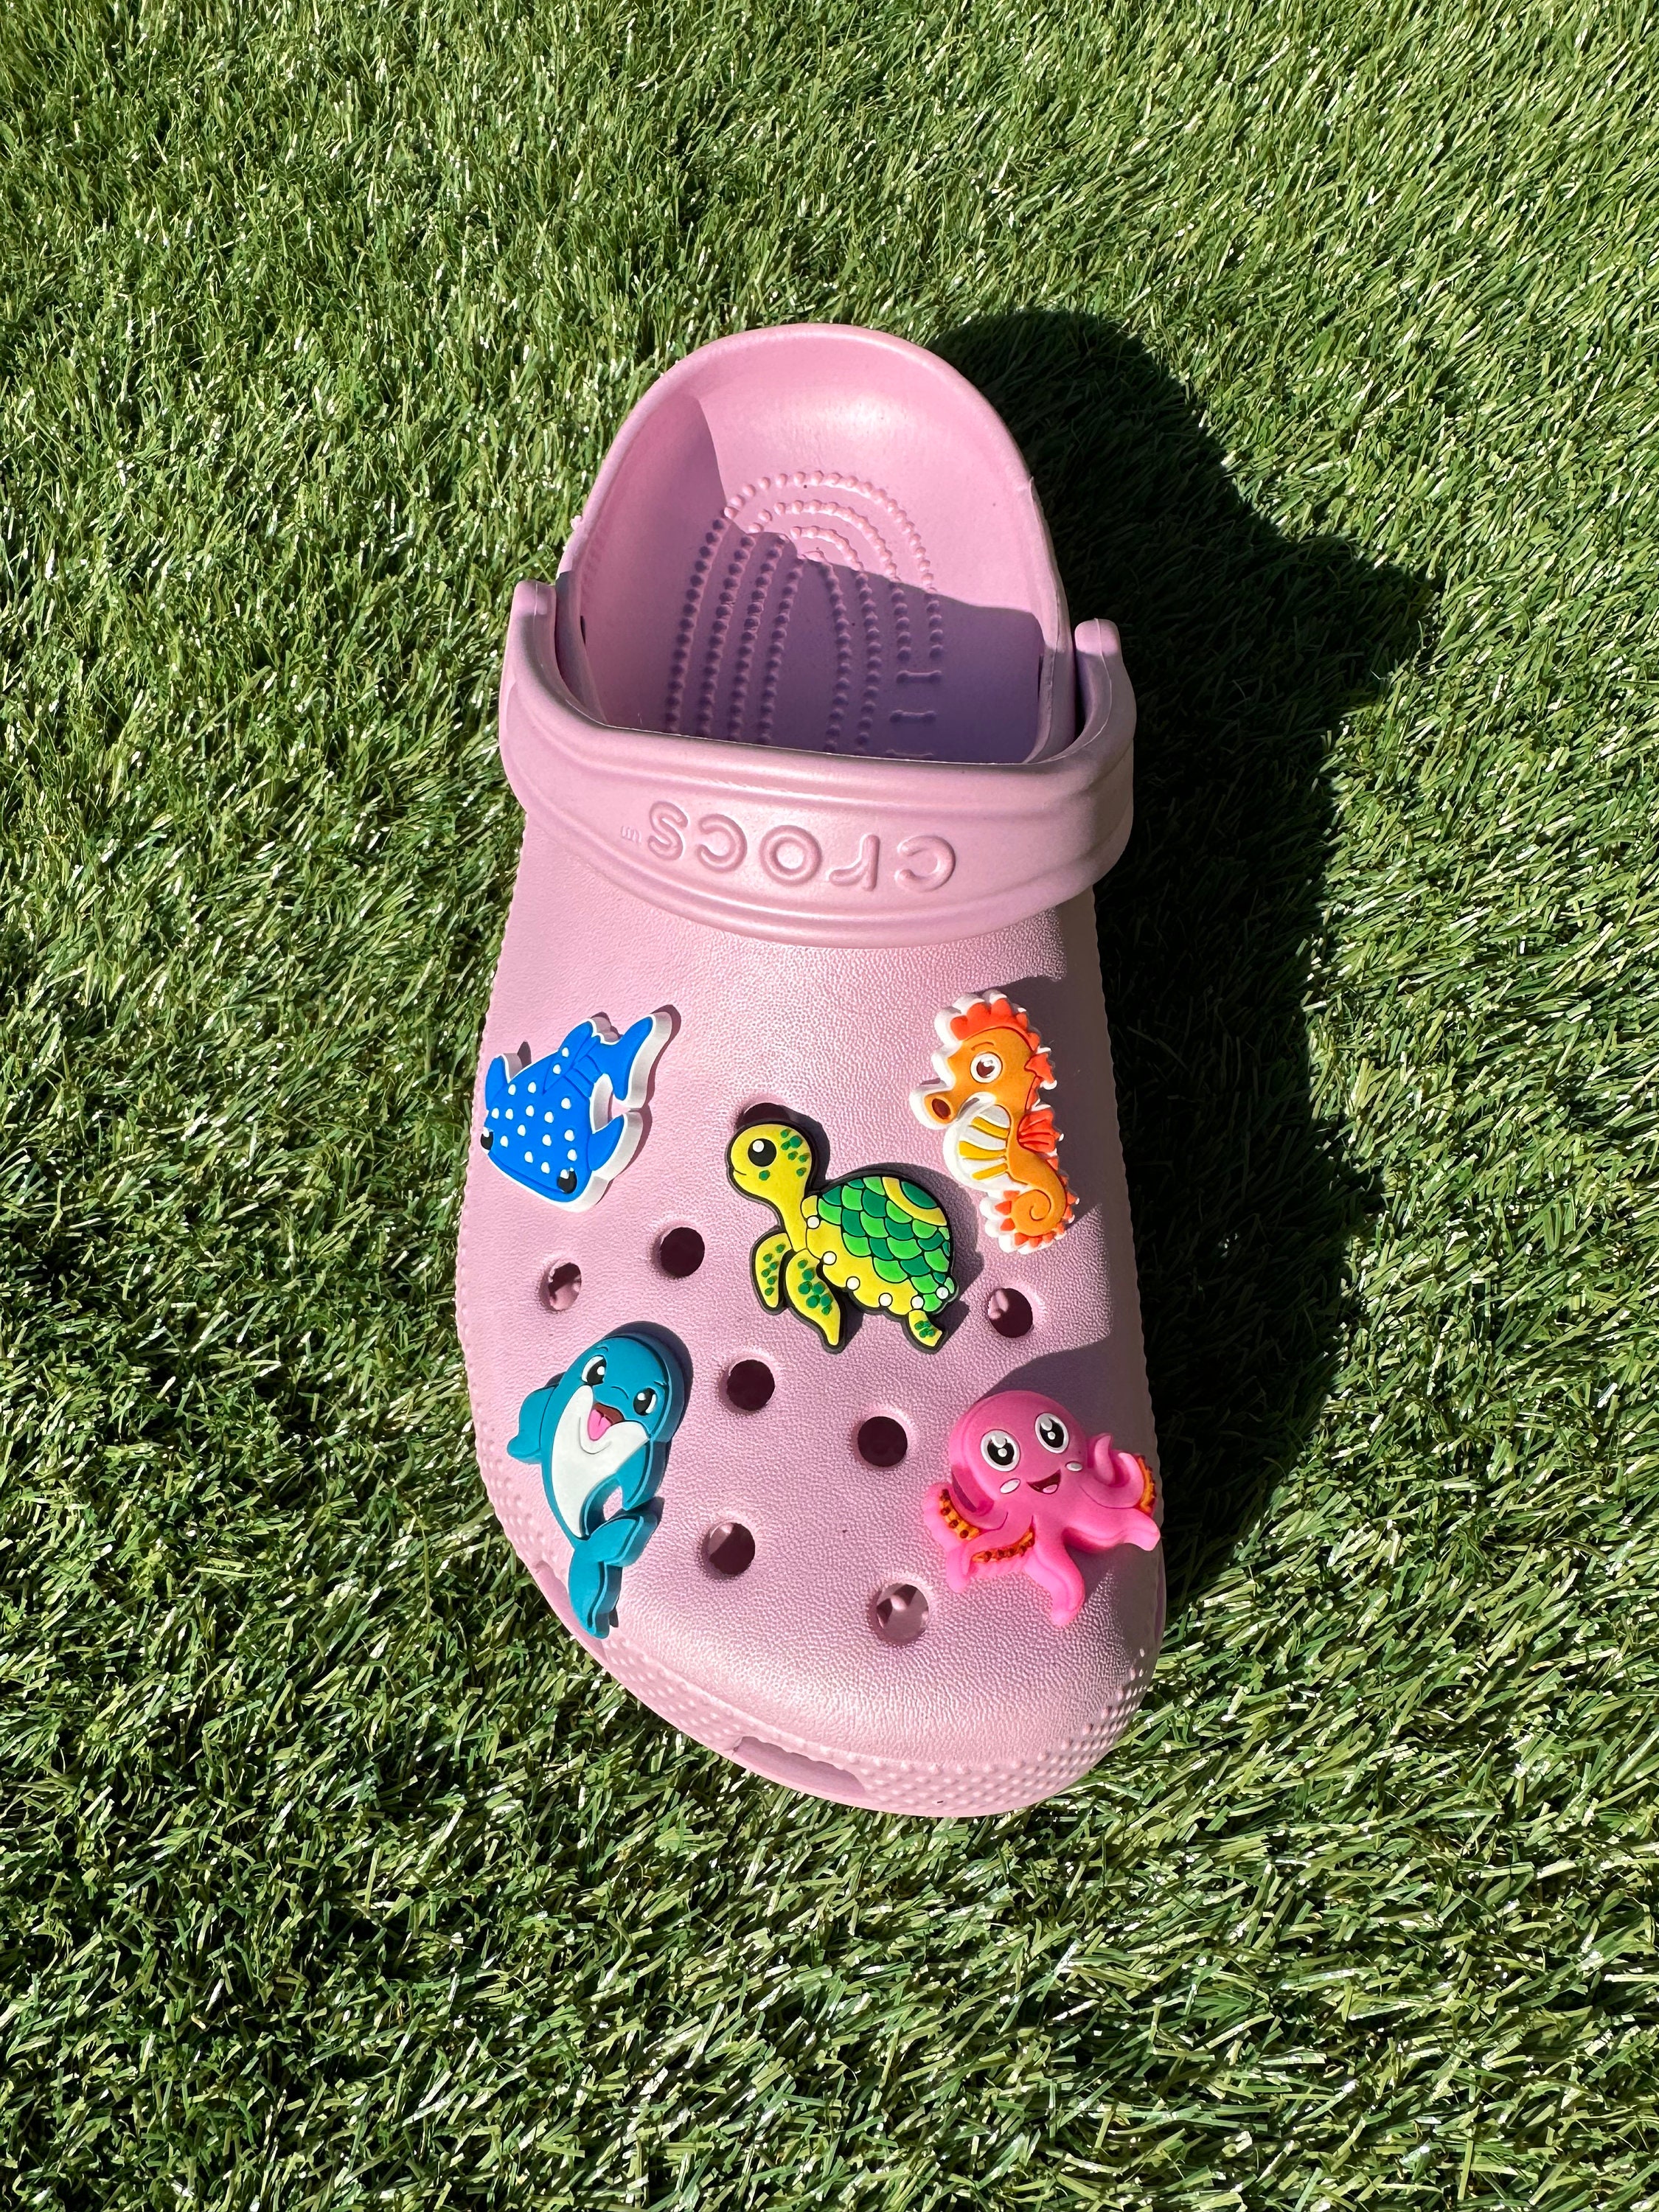 Good Vibes Croc Charm Sun Moon Star Cloud Shoe Clips Happy Shoe Charms Crocs  Accessories for Kids 